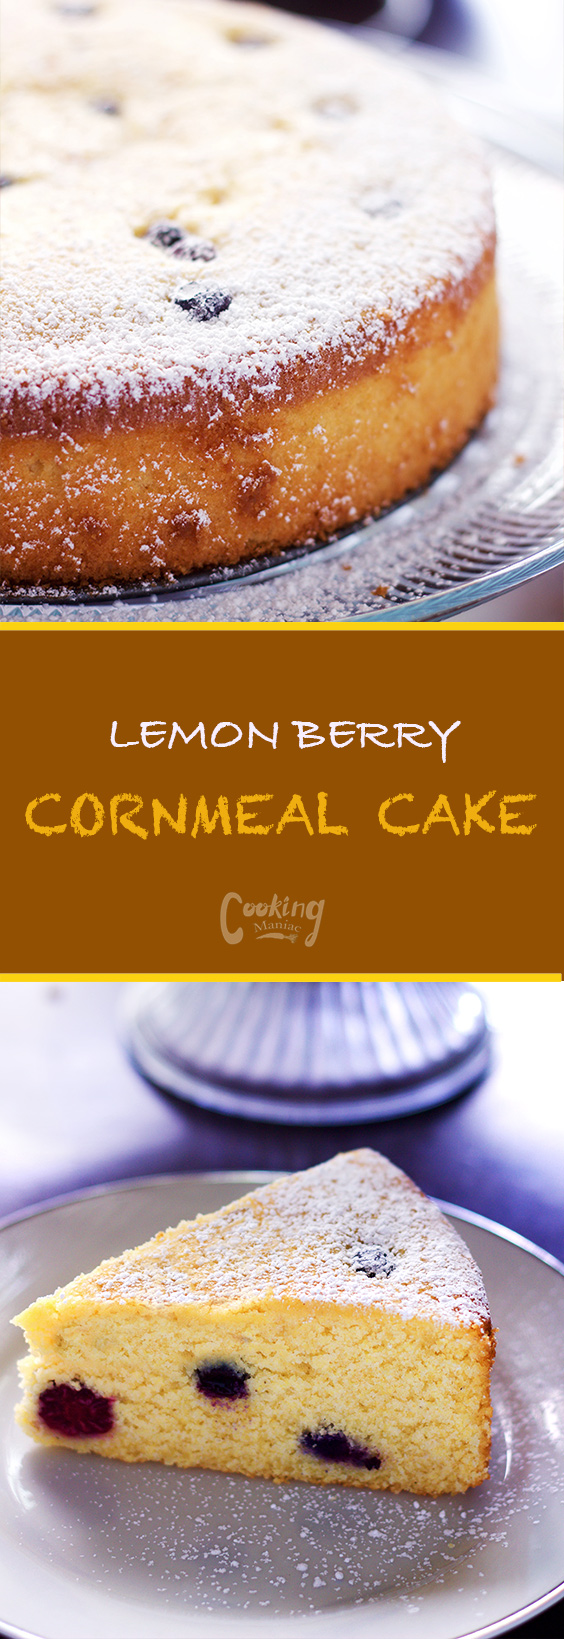 Lemon-Berry-Cormeal-cake_longpin